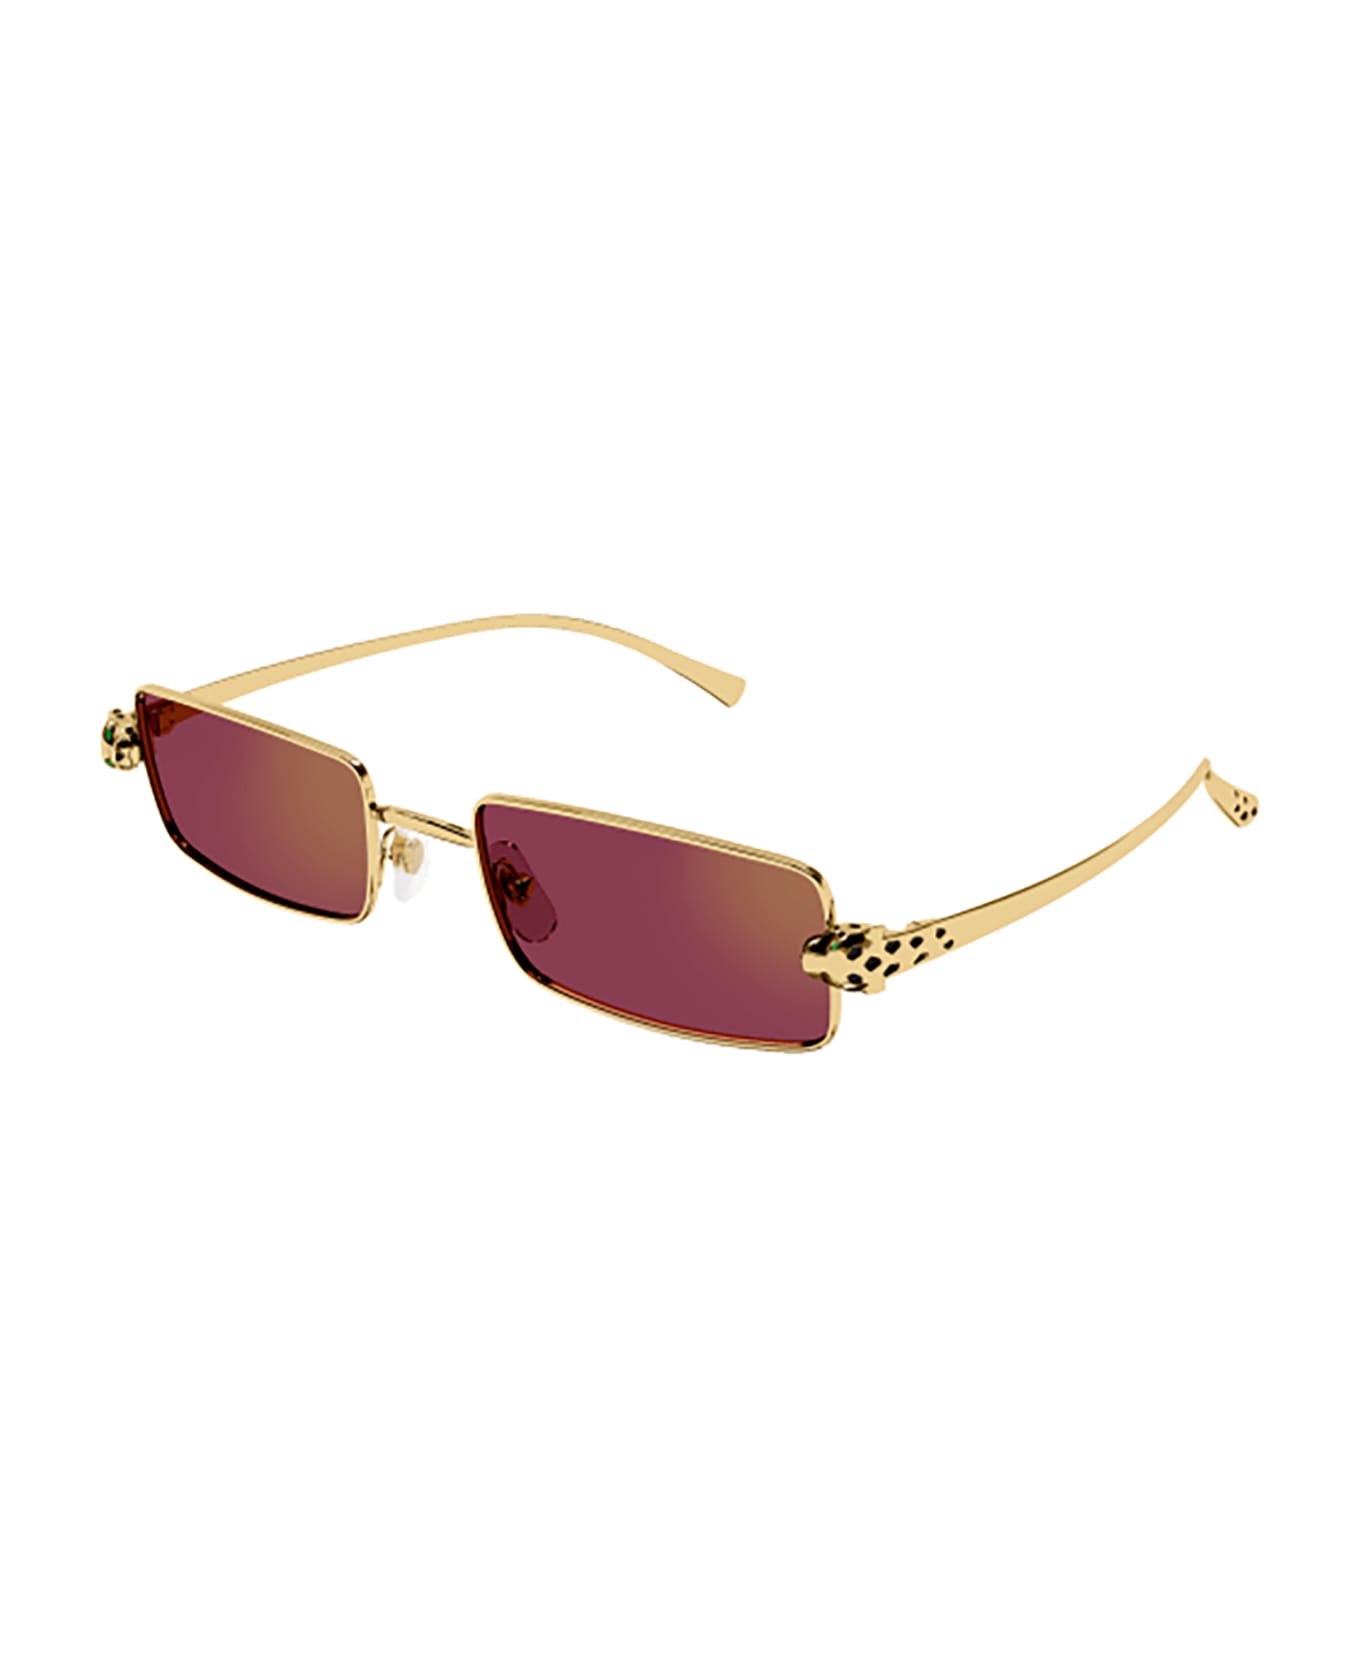 Cartier Eyewear Ct0473s Sunglasses - 002 GOLD GOLD RED サングラス